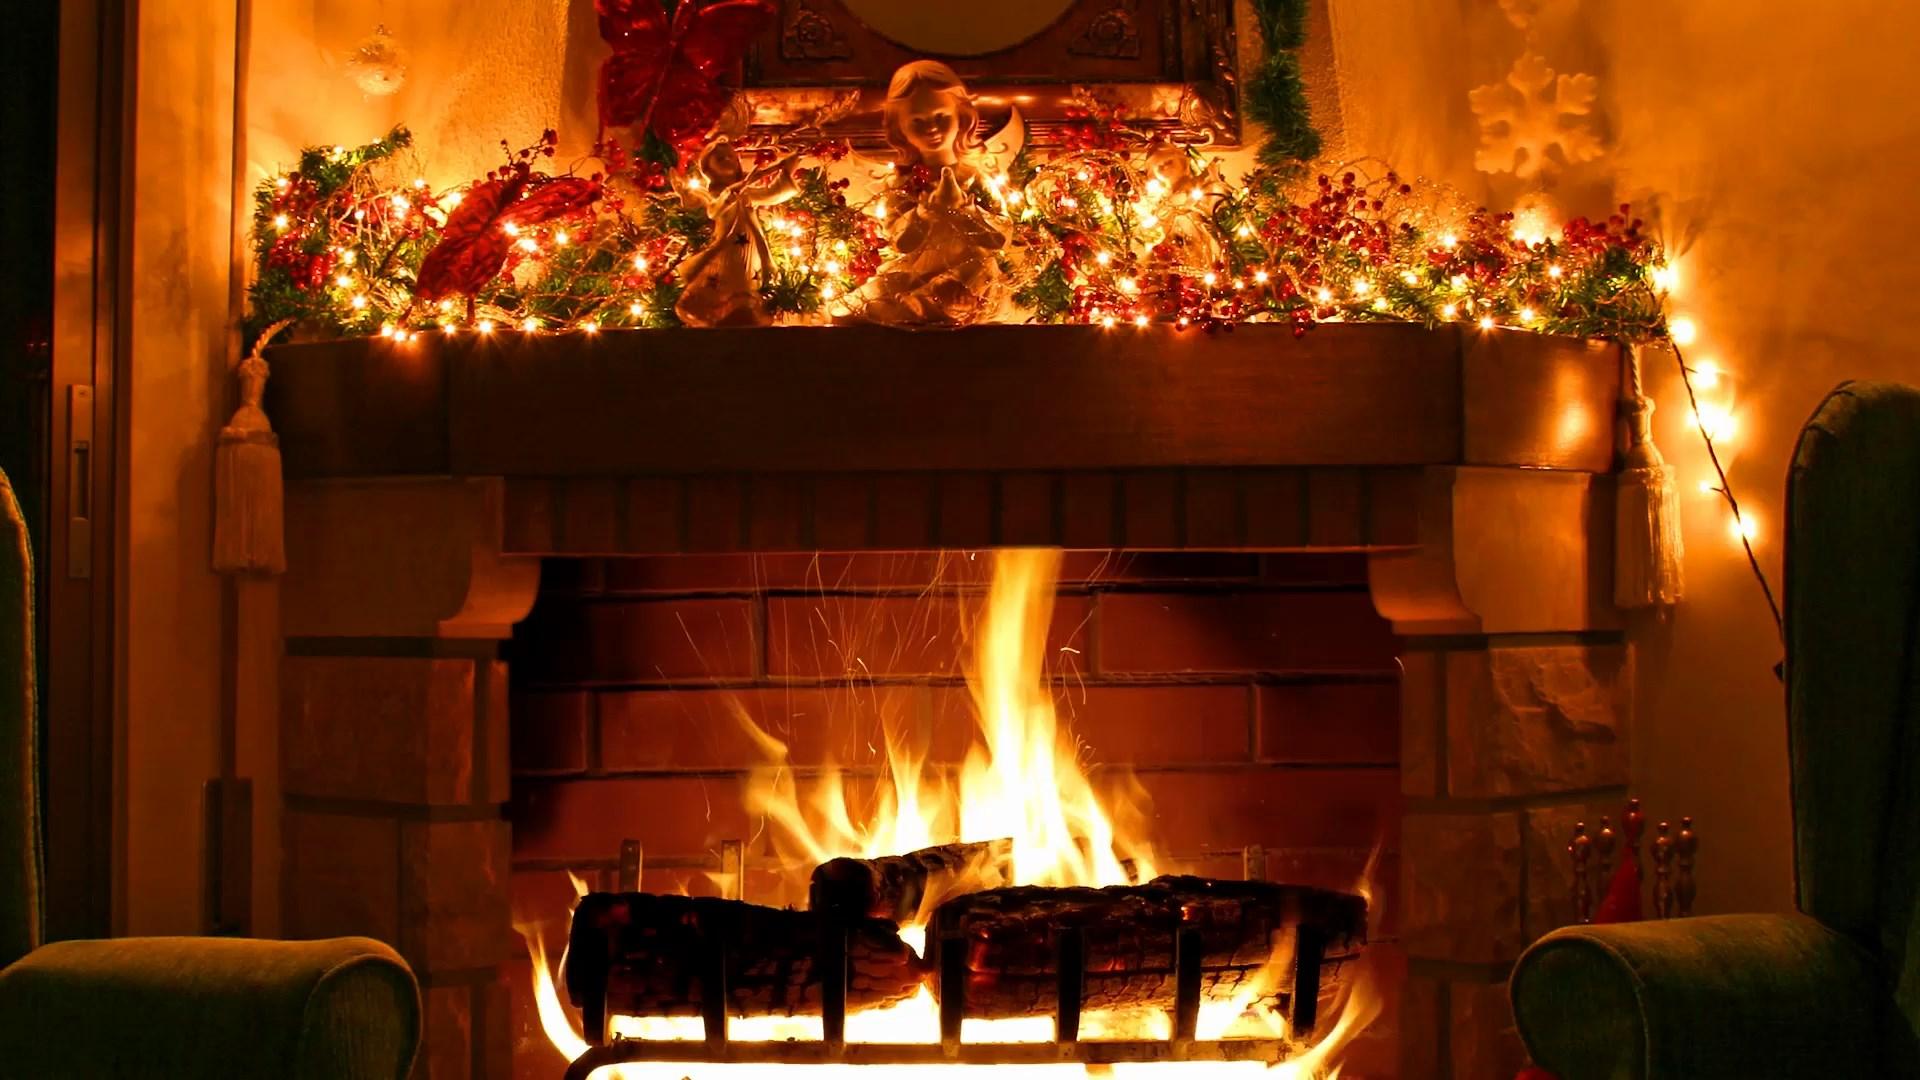 christmas music with fireplace screensaver